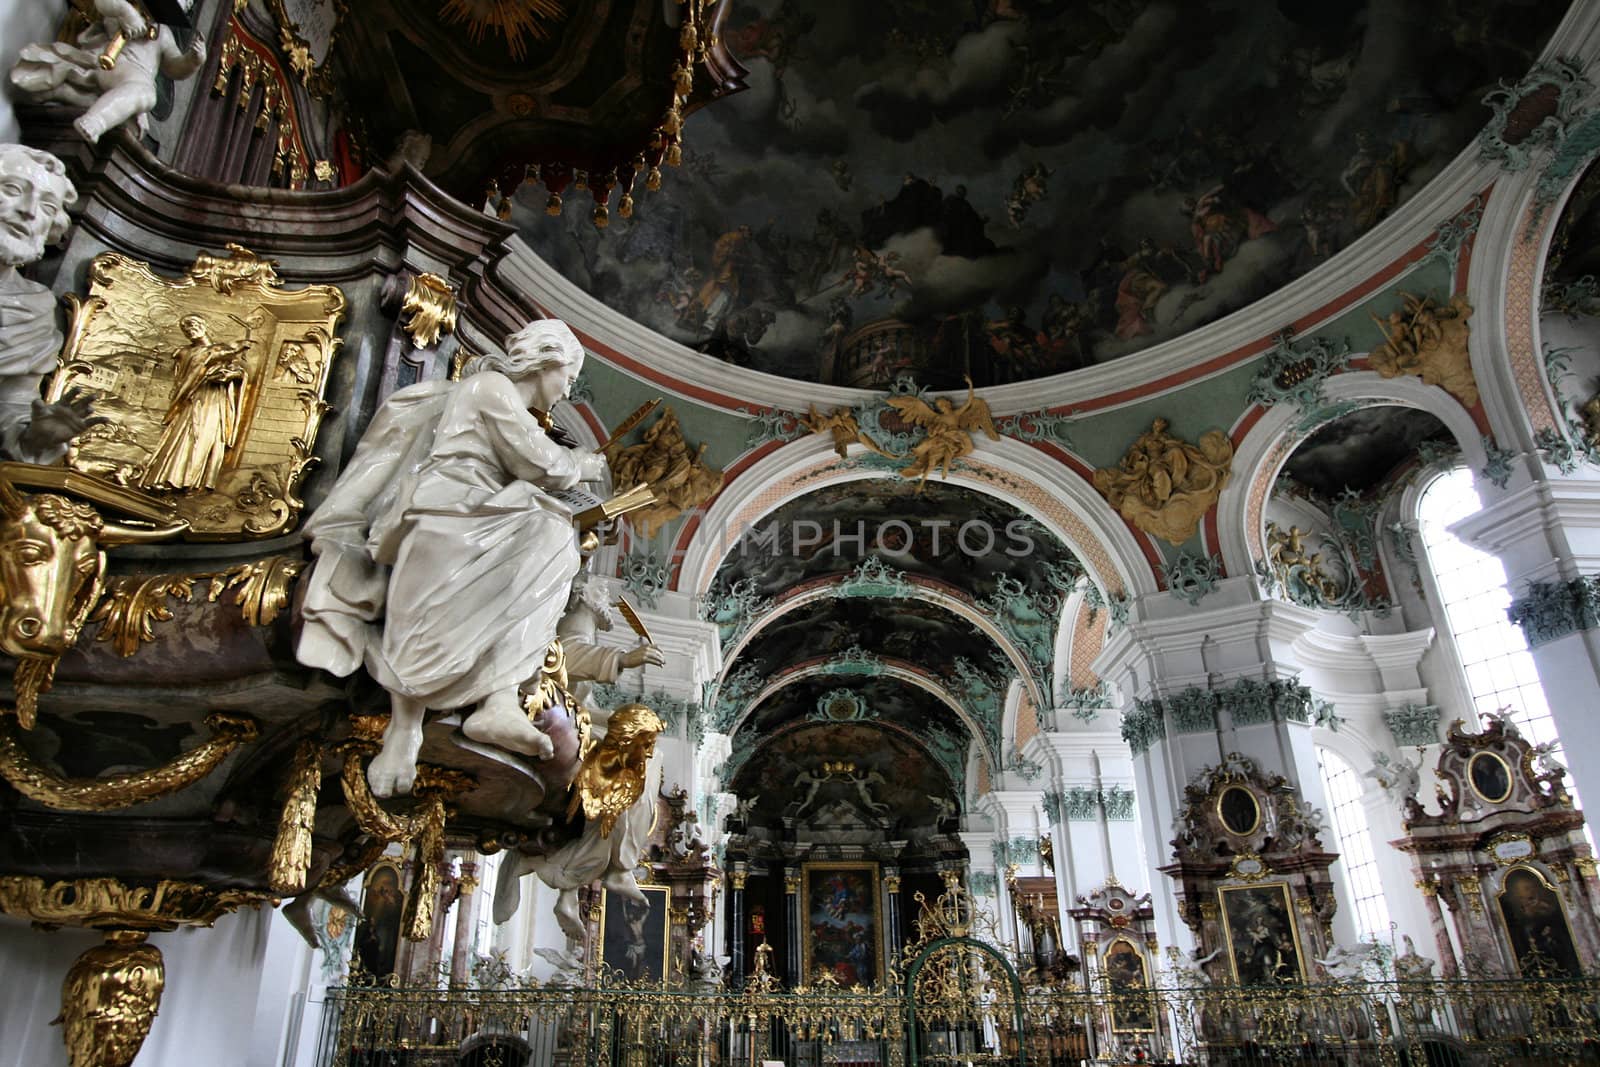 St. Gallen cathedral interior. Swiss landmark, listed on Unesco World Heritage List.